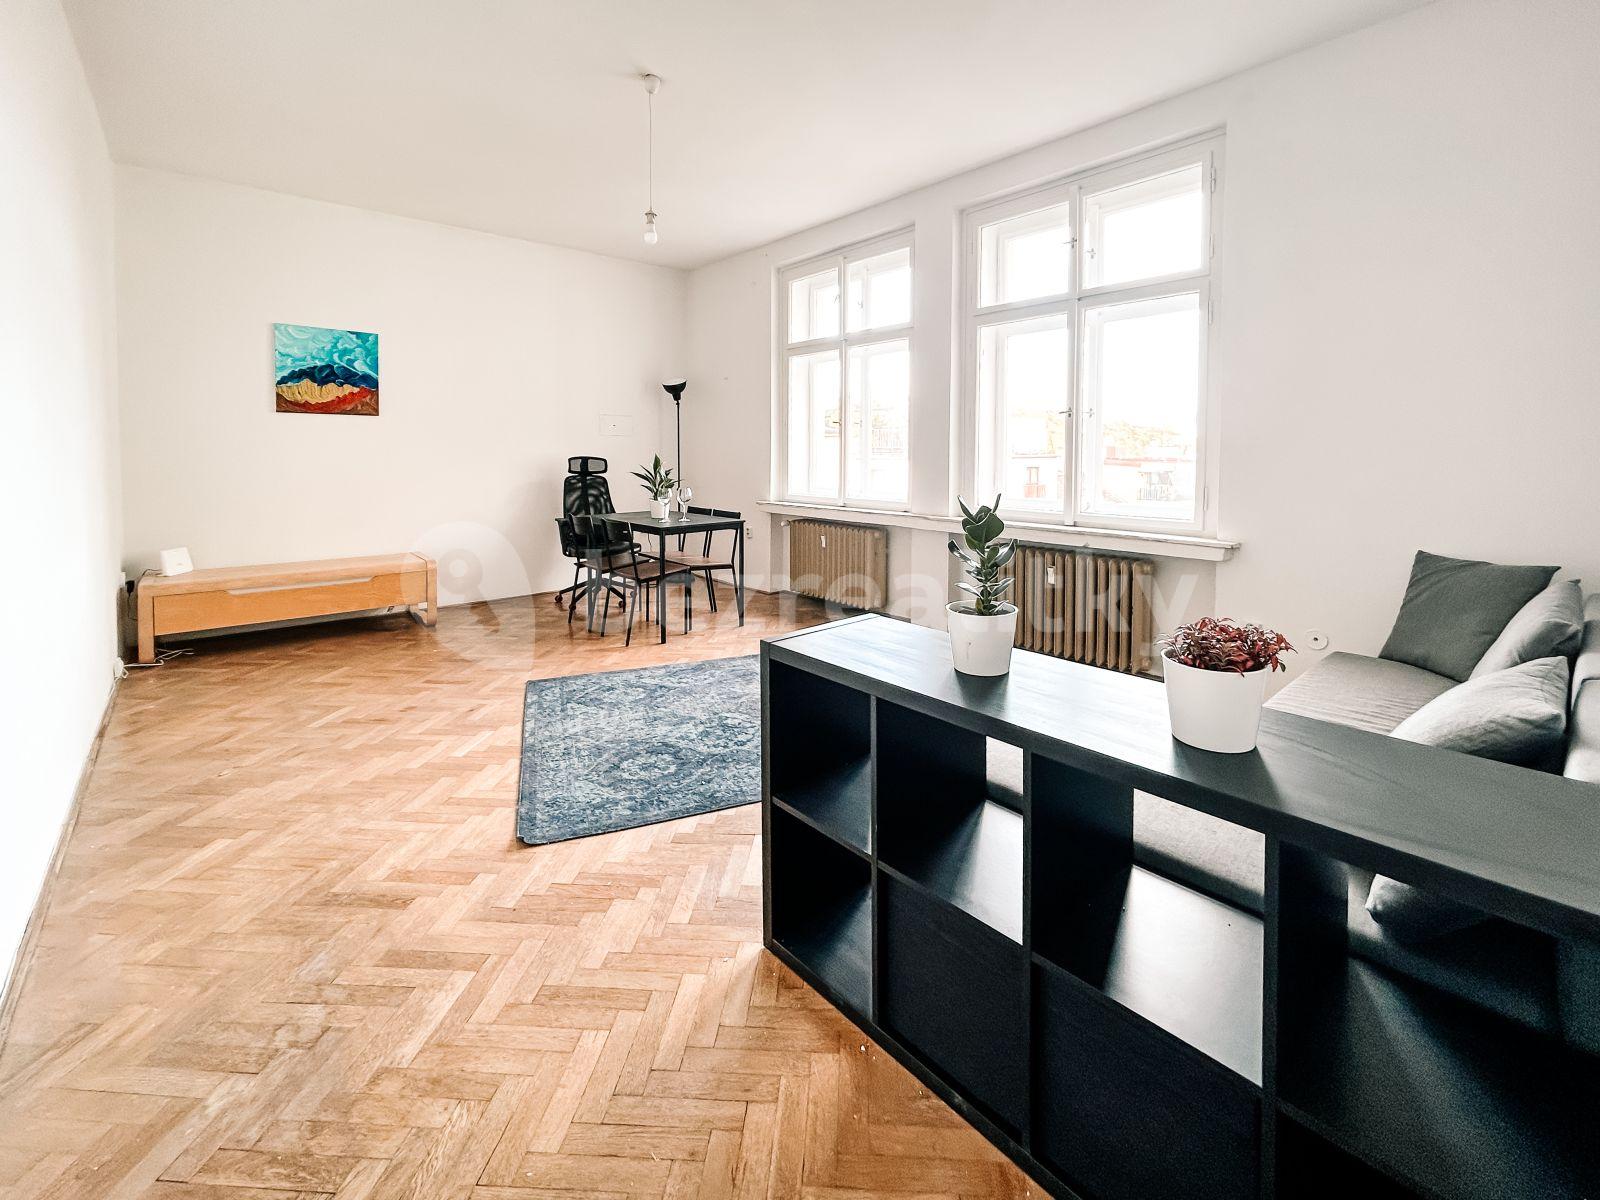 2 bedroom flat to rent, 58 m², Husinecká, Prague, Prague